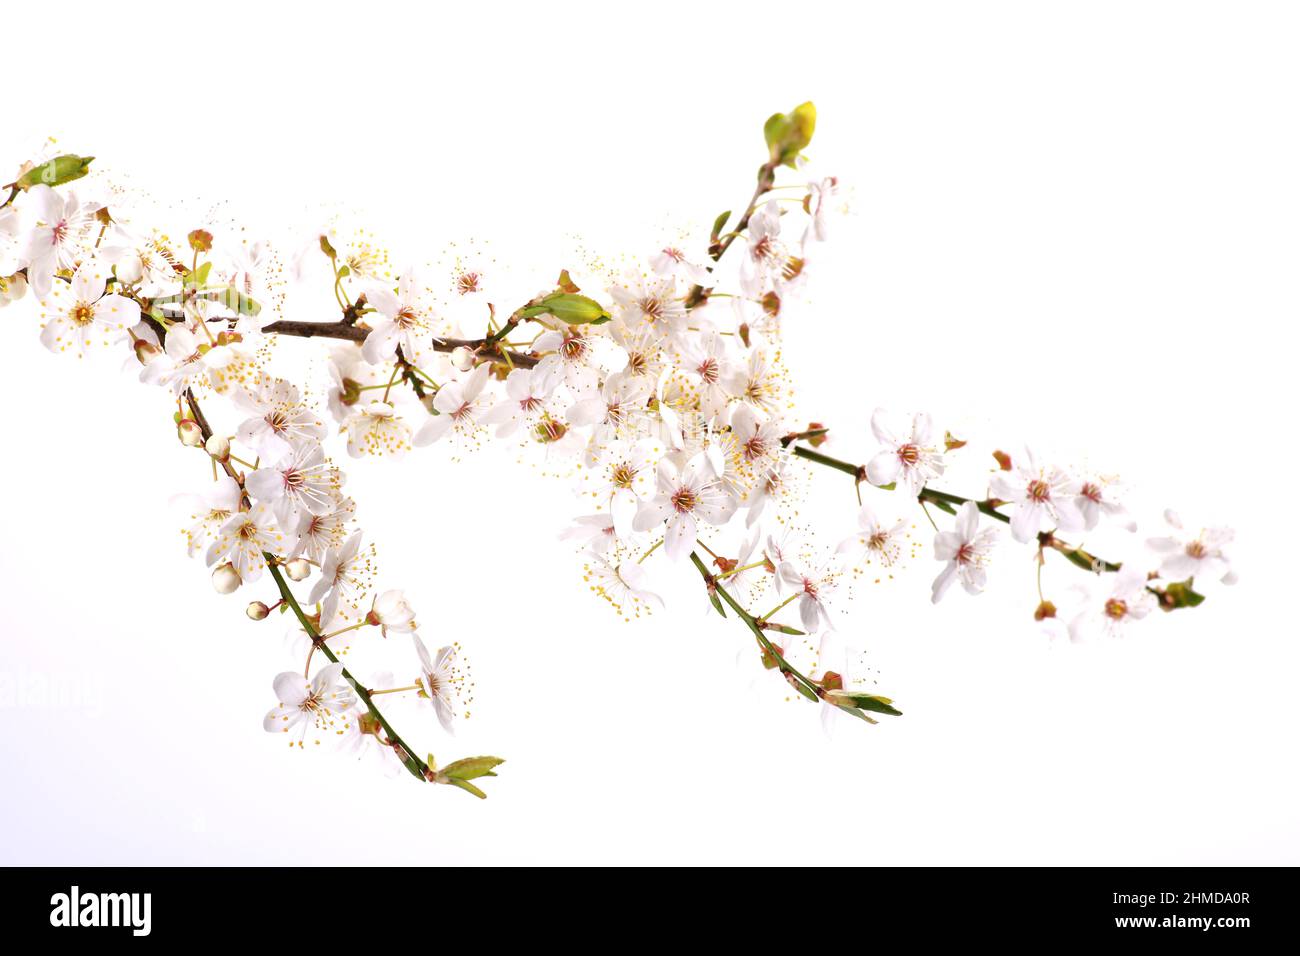 Blooming plum tree closeup. Spring white flowers. Plum-tree branch covered with white flowers and new foliage on white background. Stock Photo